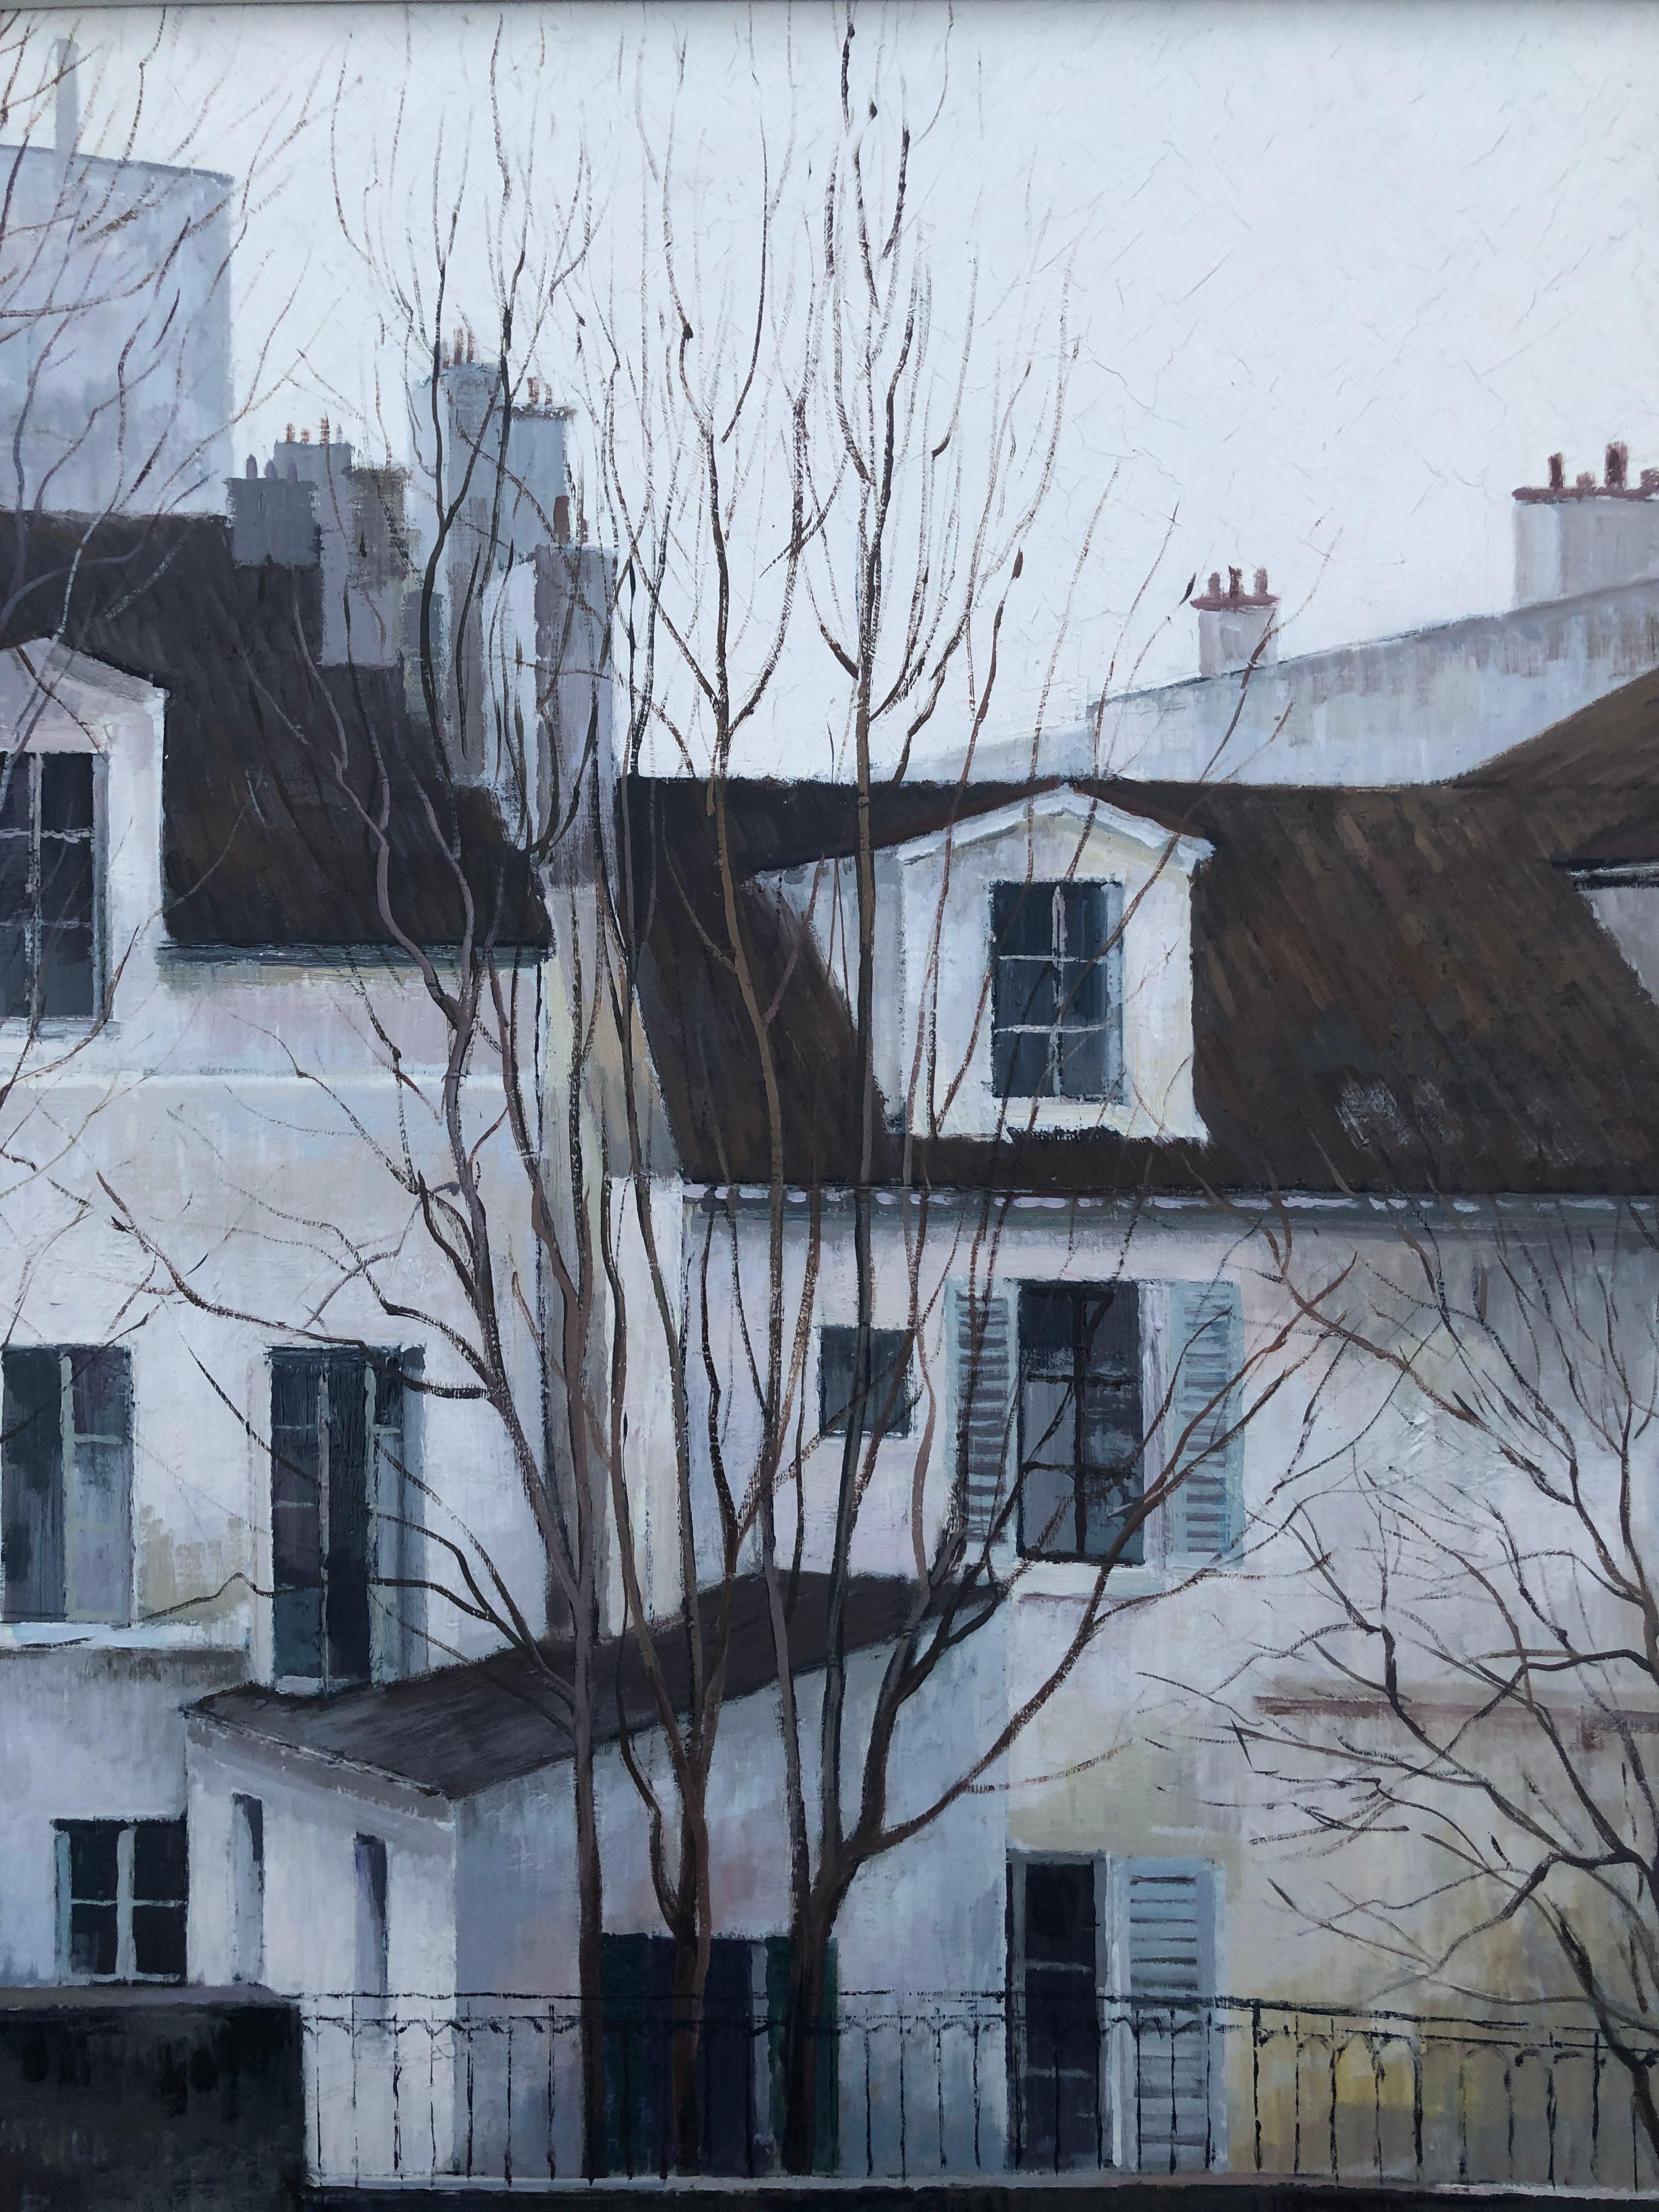 Vayreda Canadell Paris neighborhood urban landscape oil on canvas painting 3